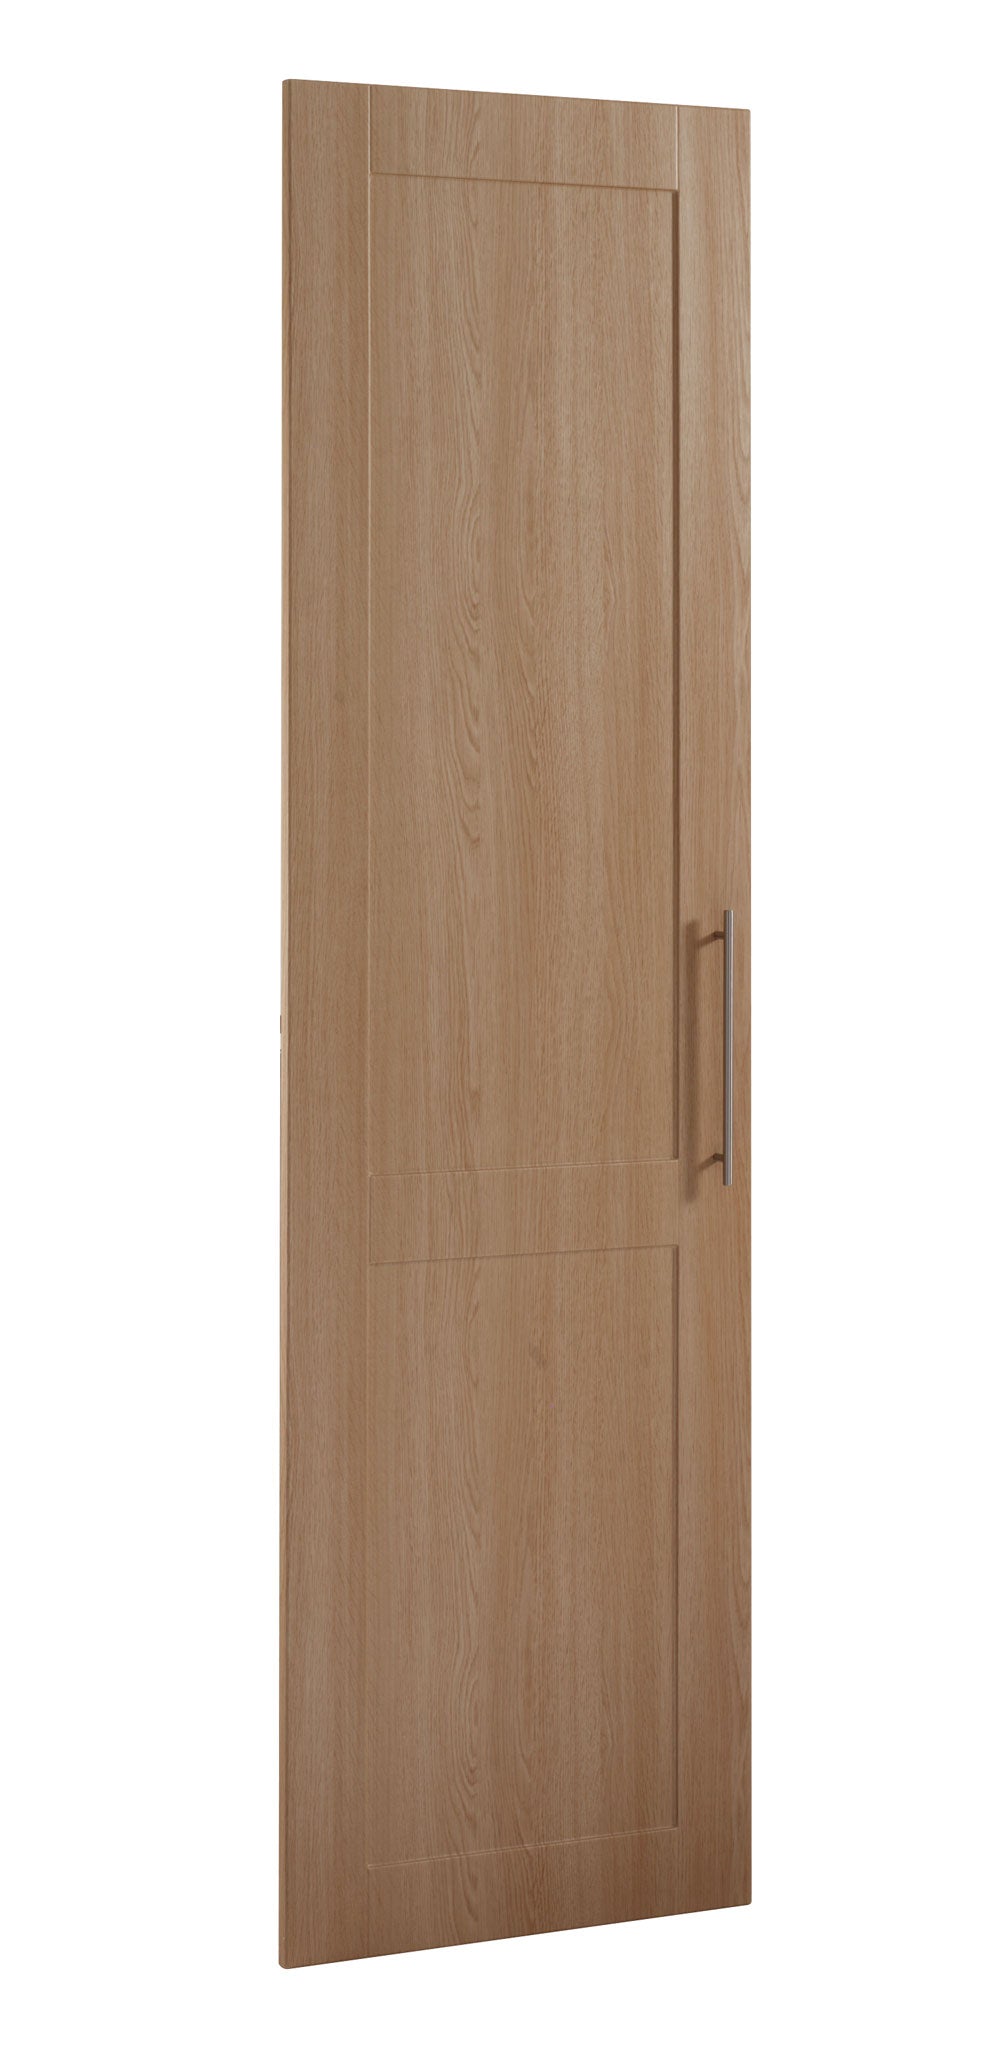 Traditional shaker cupboard door in wood finish